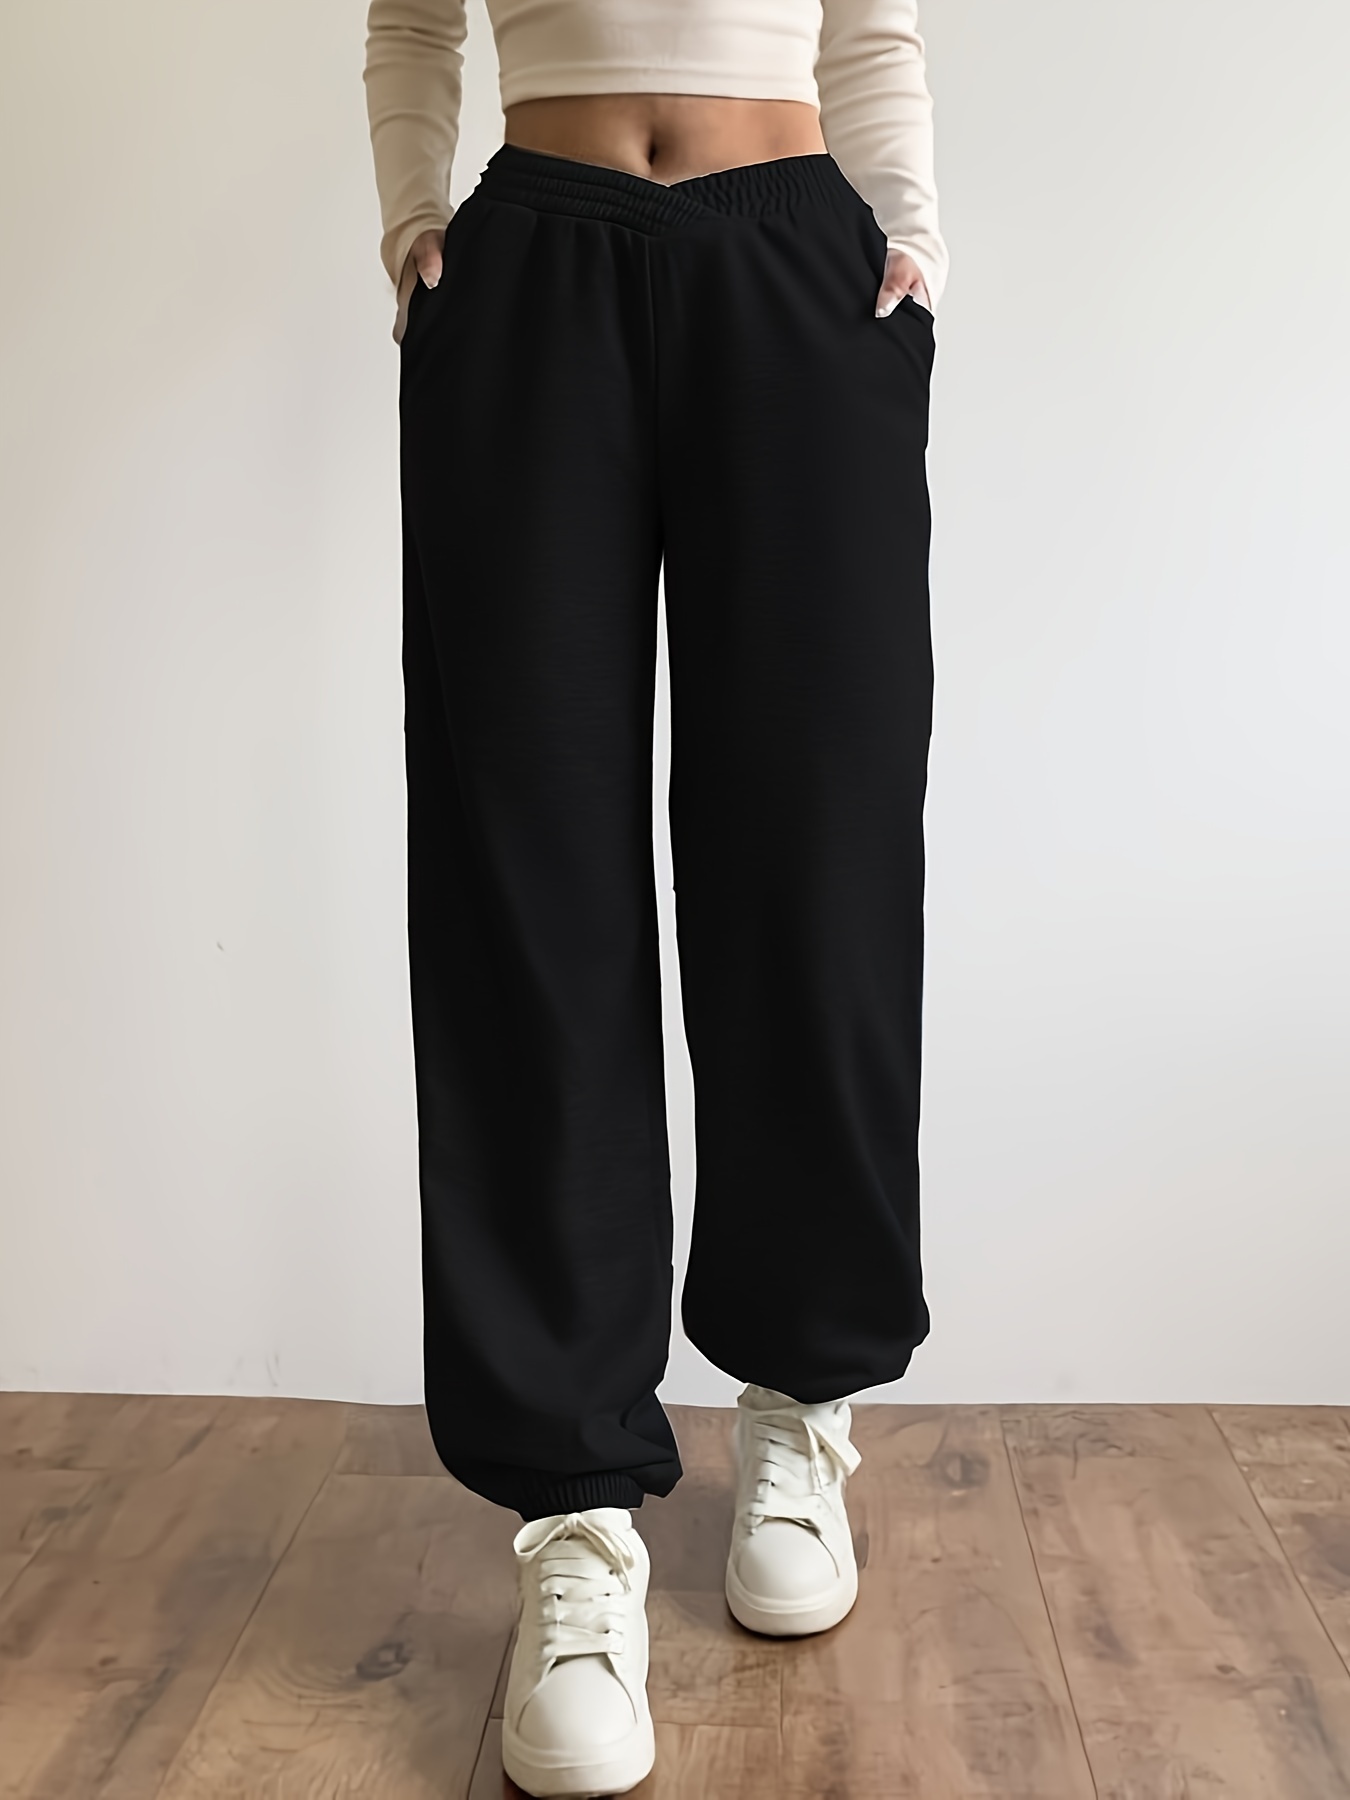 Womens Casual Pants Elastic Waist Solid Sweatpants Grey XL 